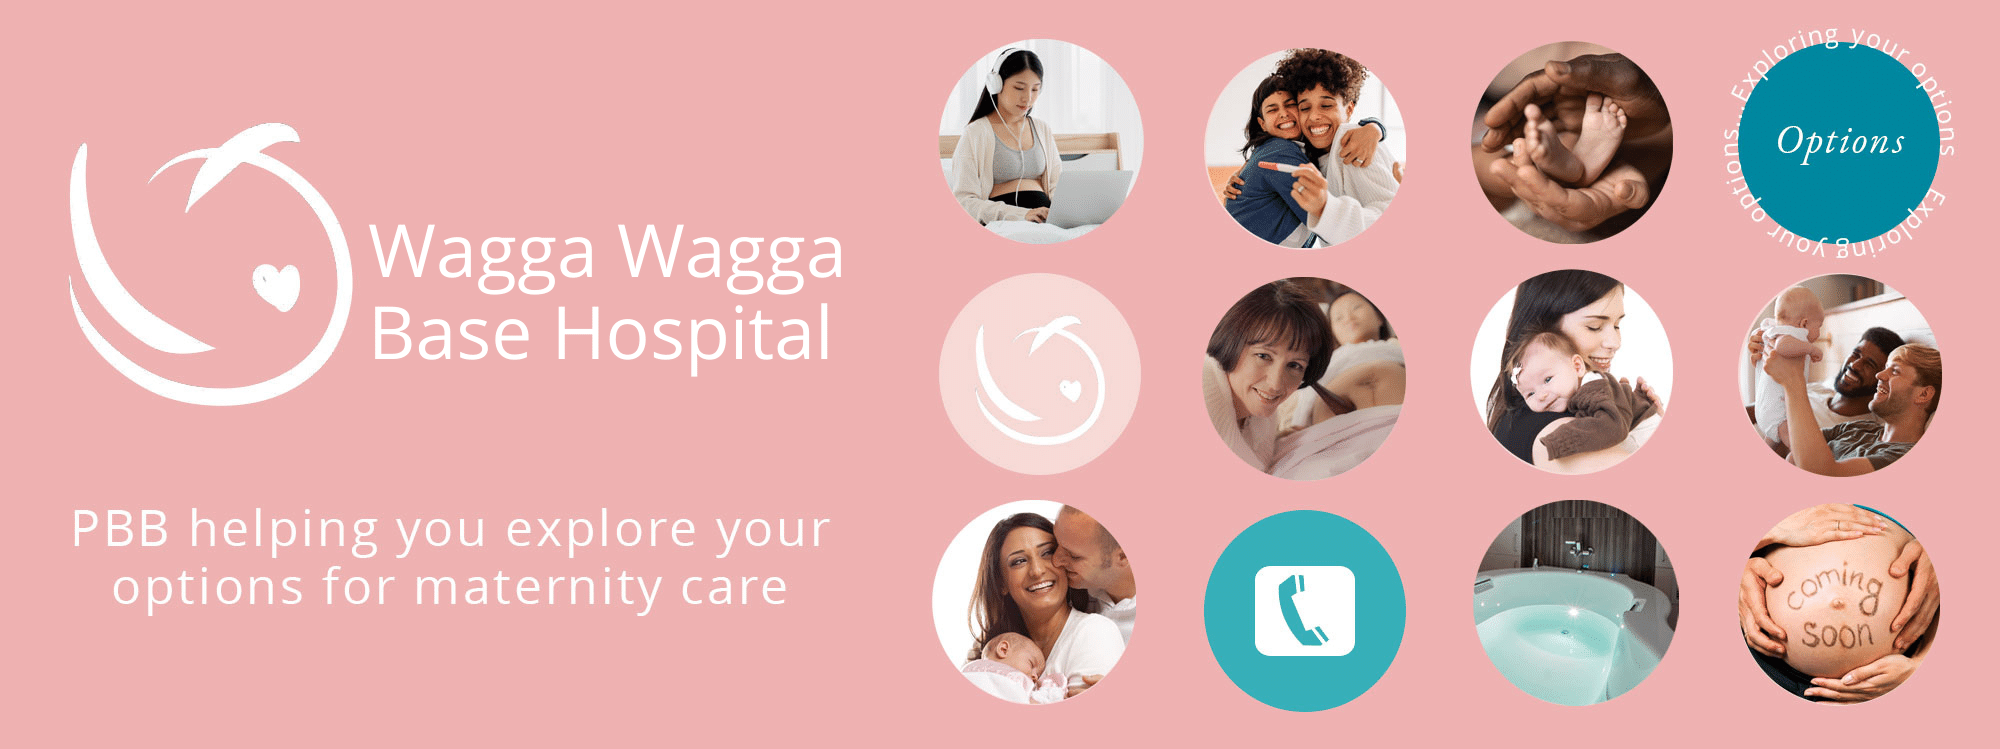 Wagga Wagga Base Hospital